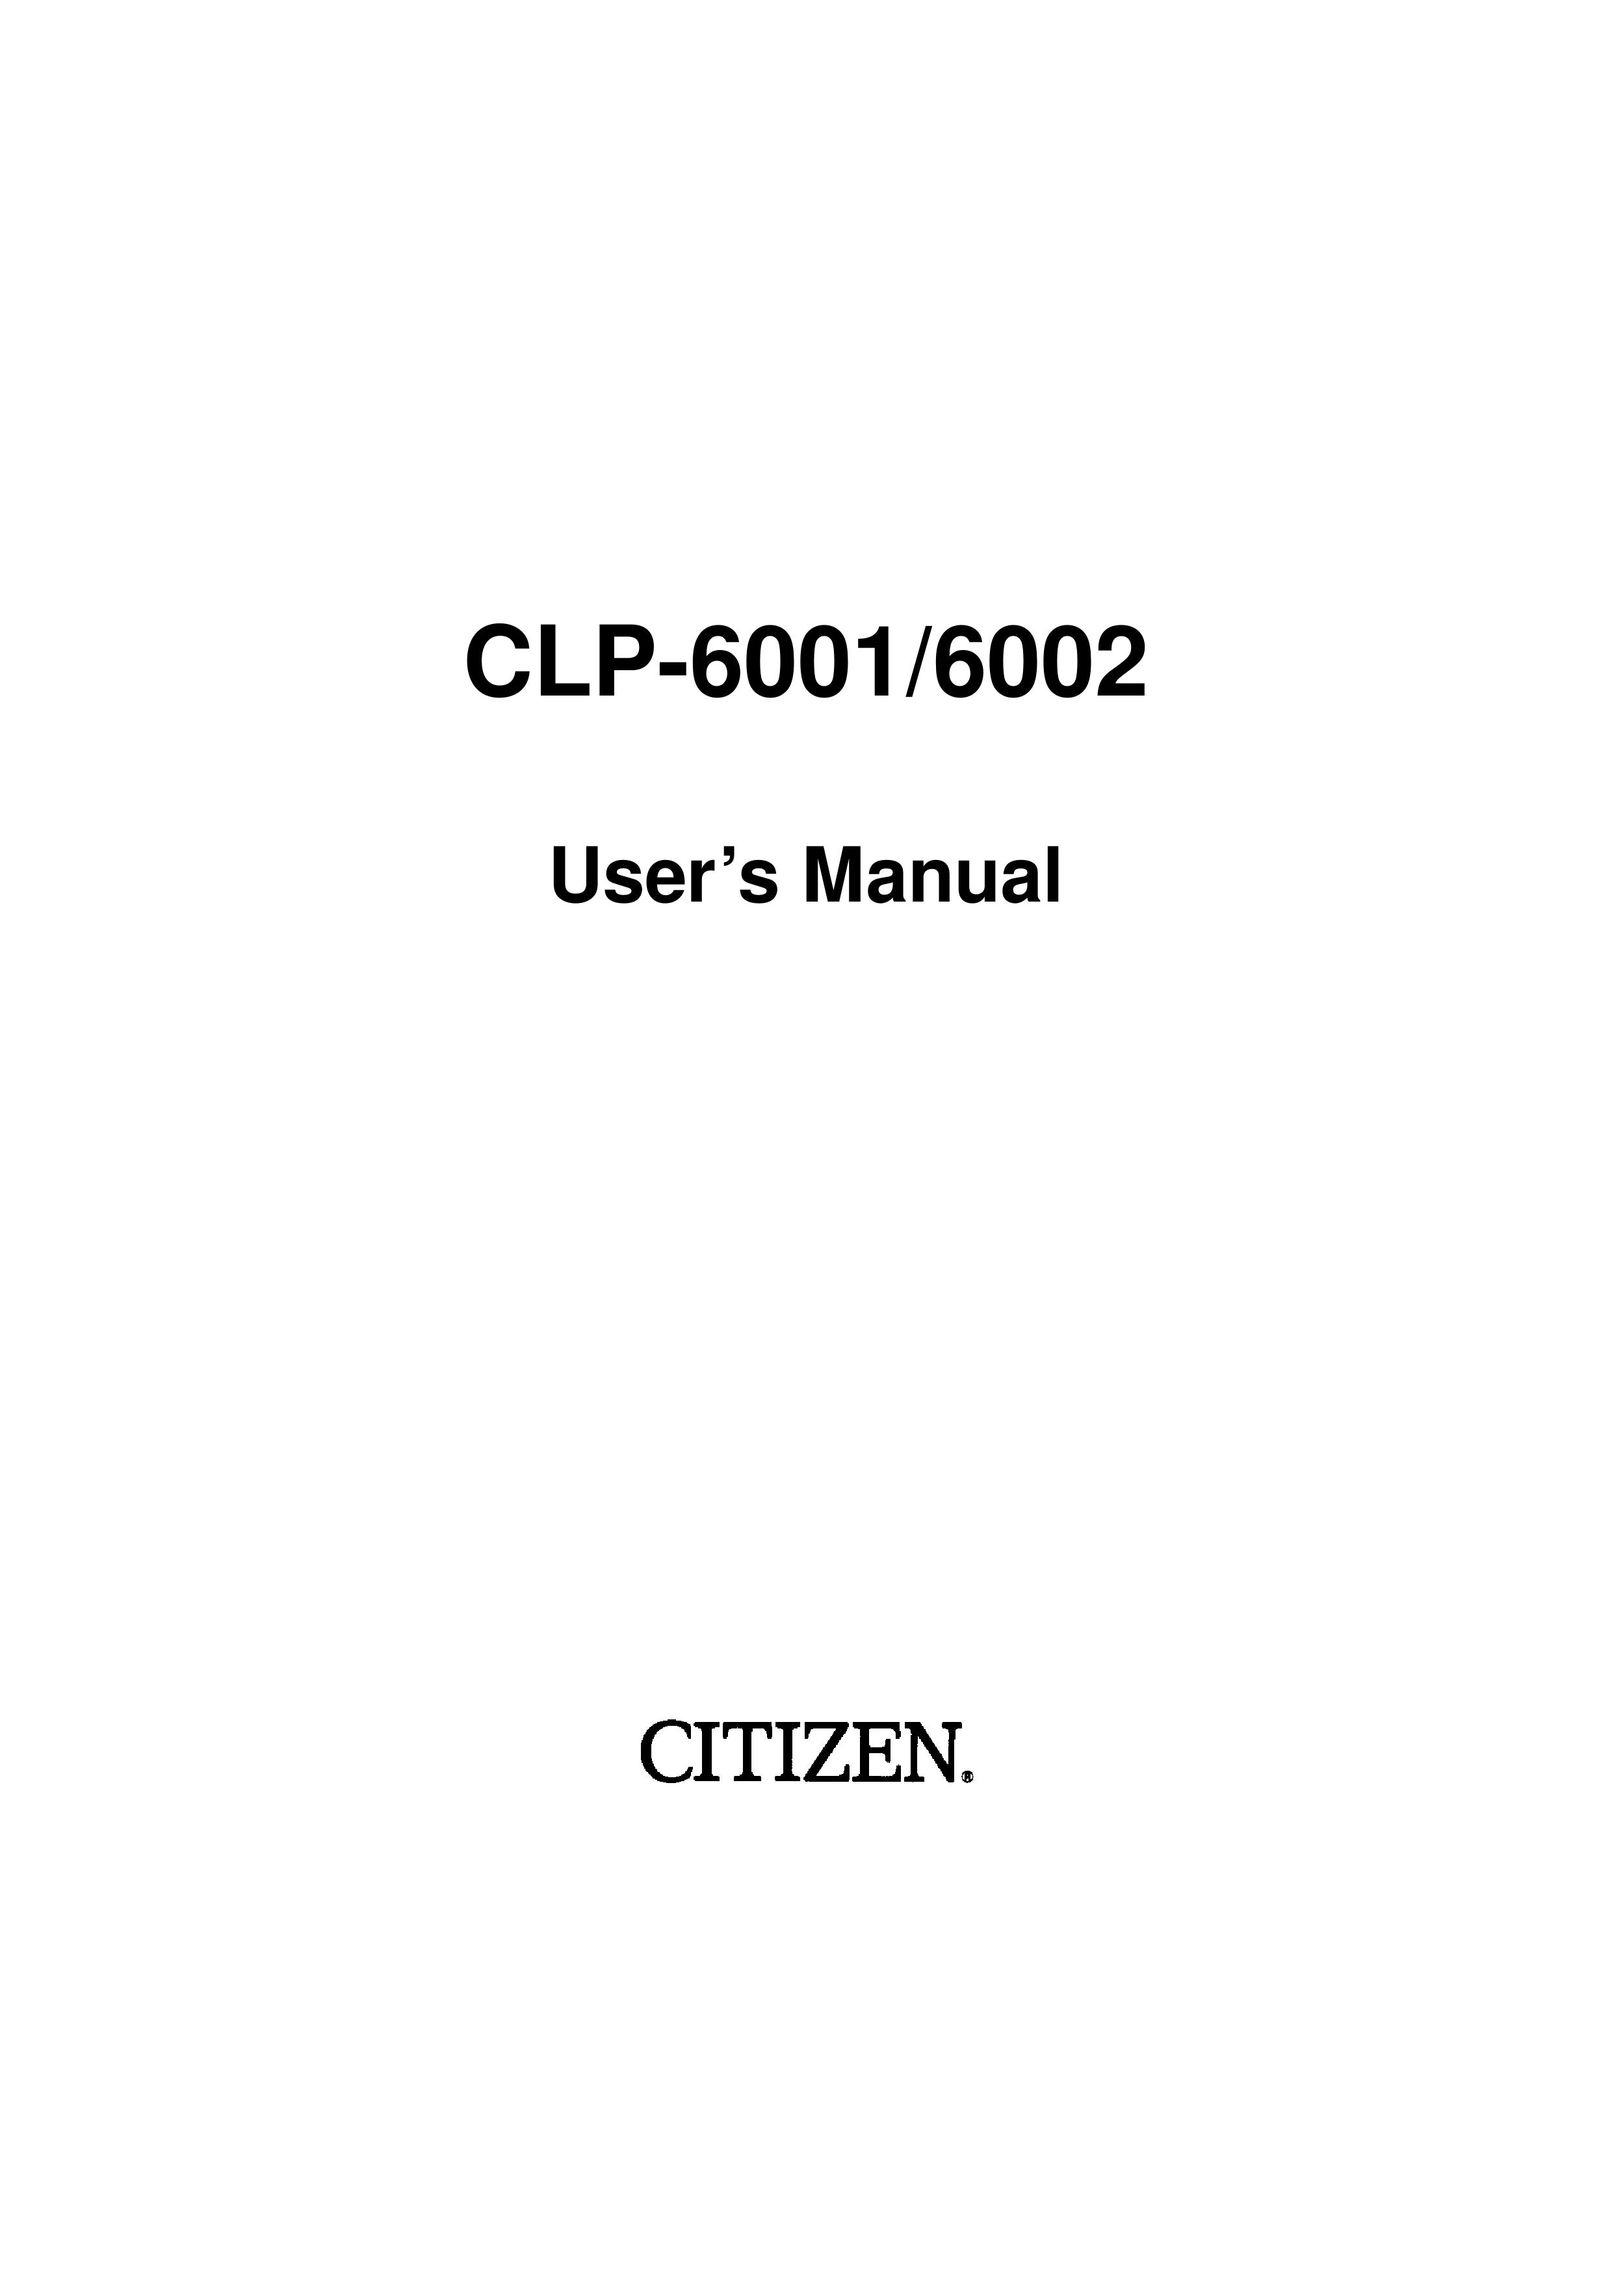 Citizen Systems CLP-6001 Printer User Manual